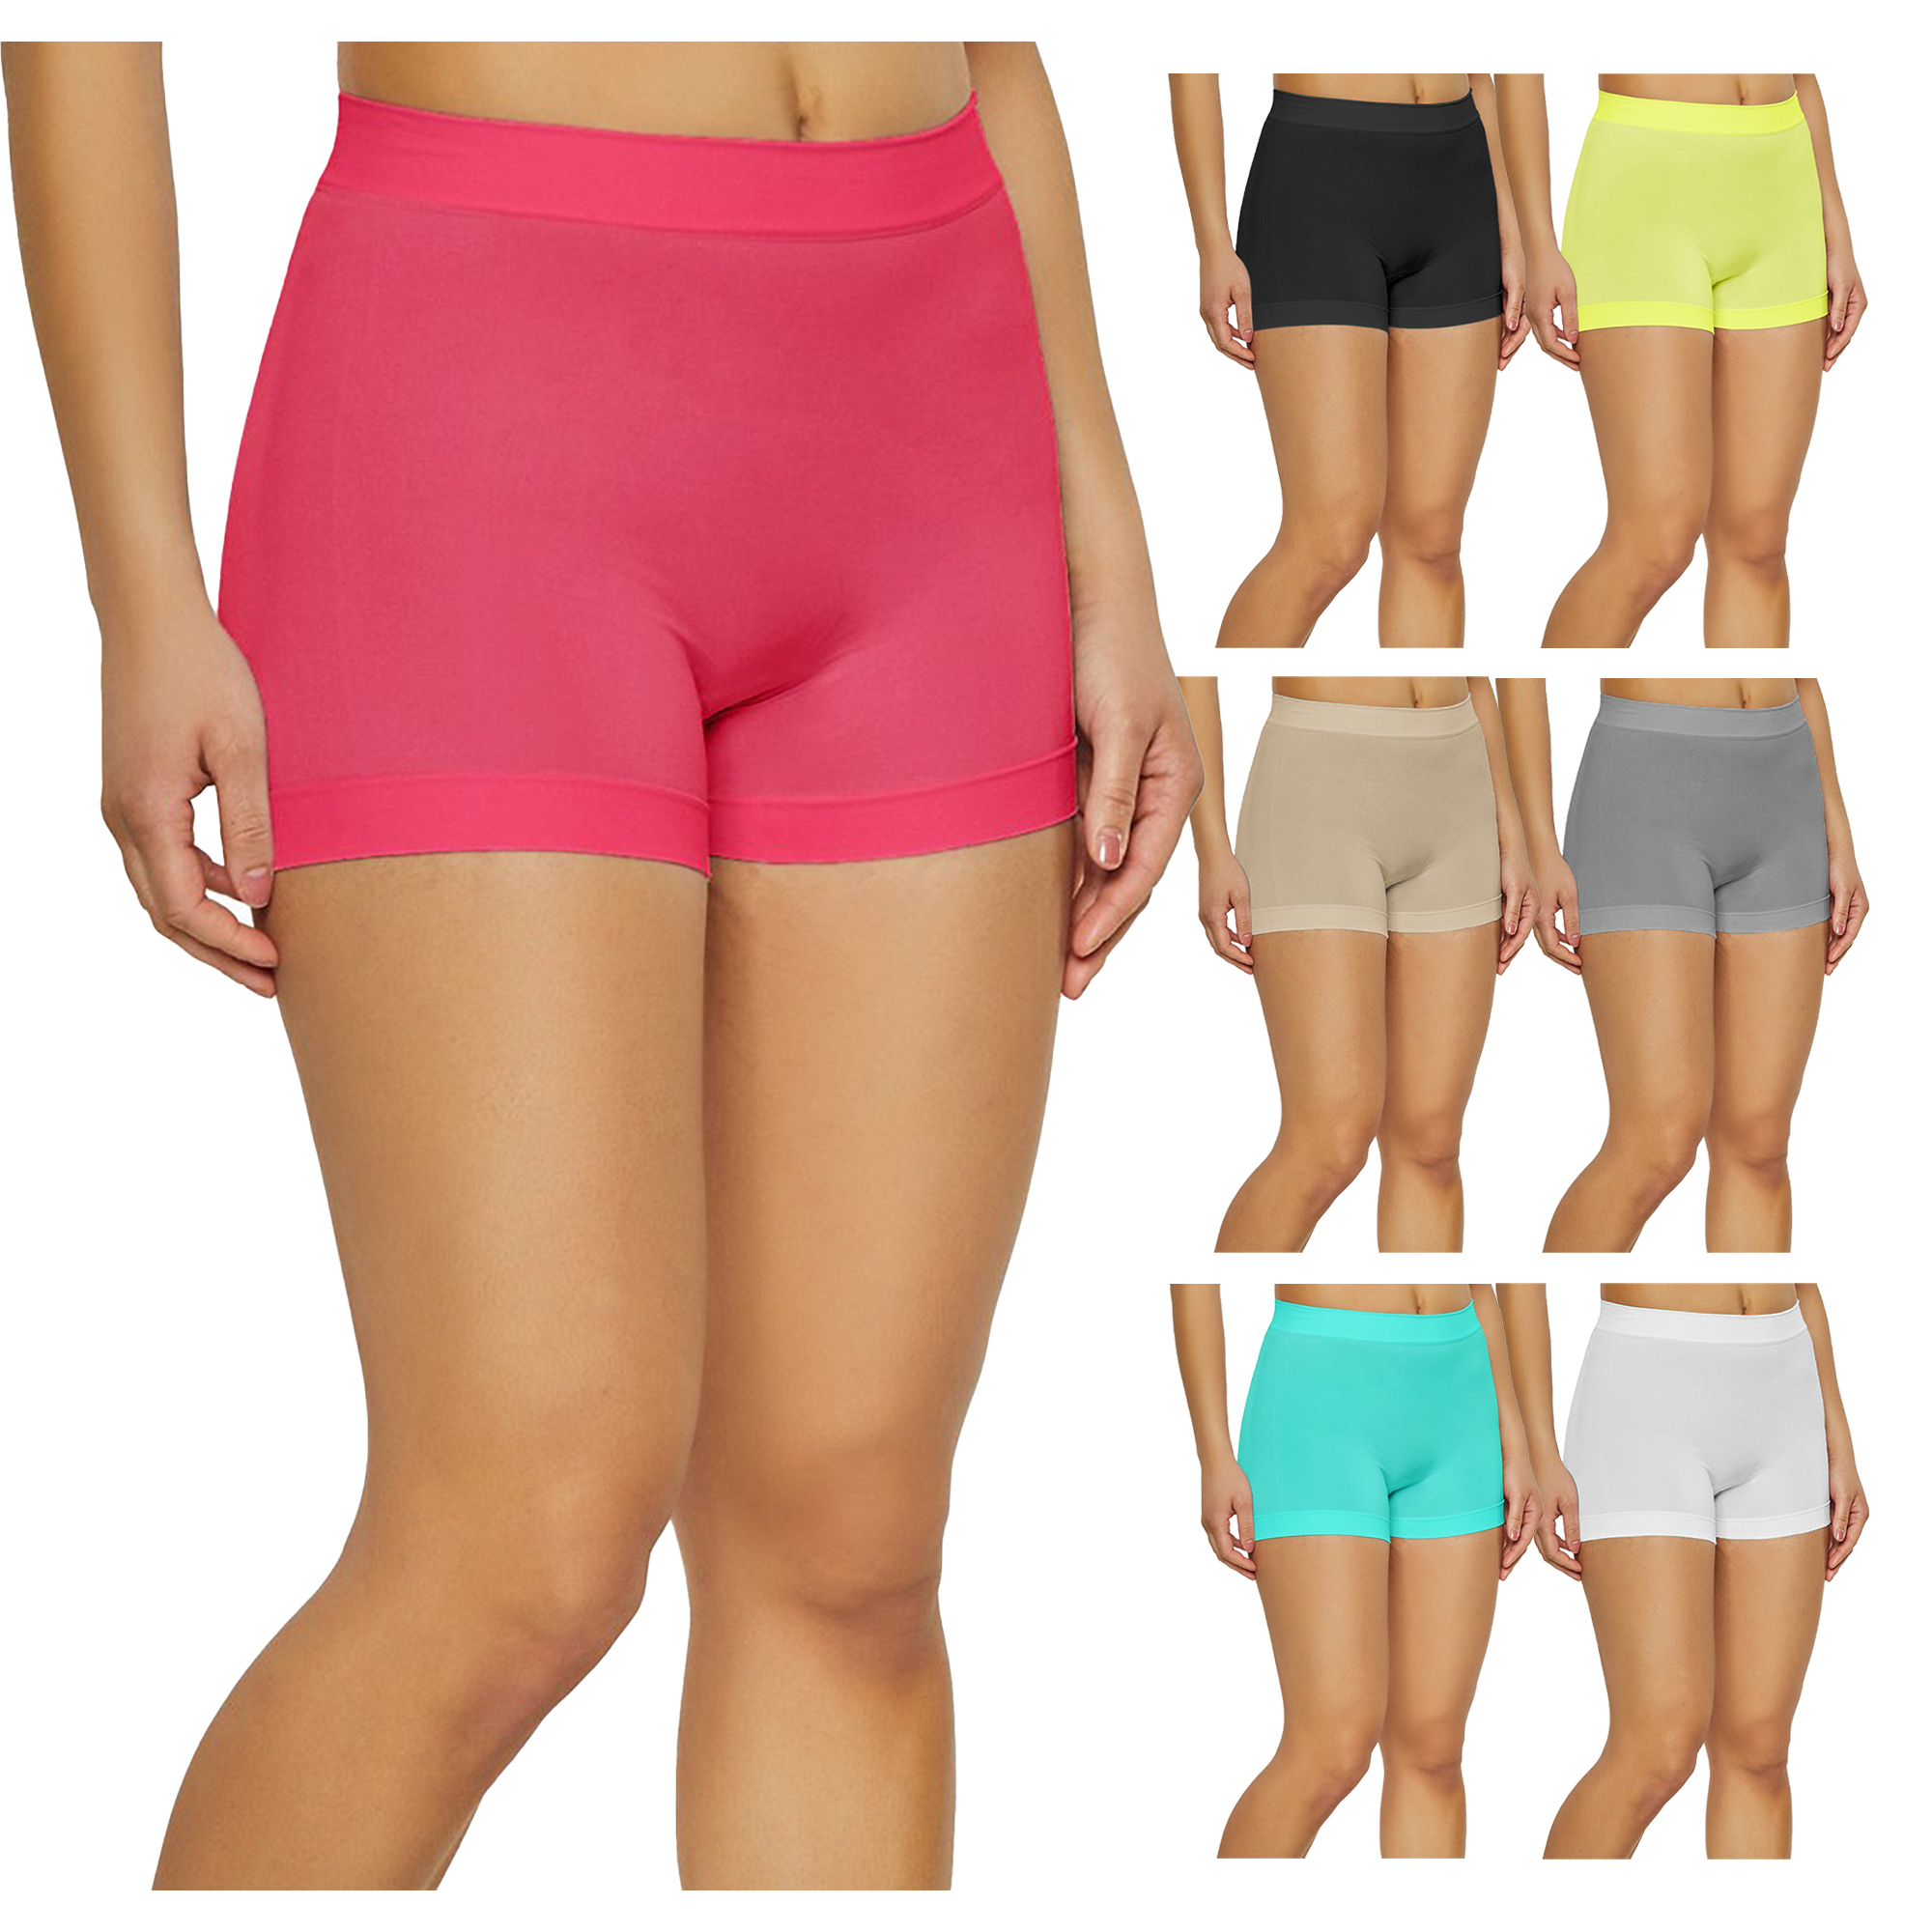 12-Pack Women's High Waisted Biker Bottom Shorts For Yoga Gym Running Ladies Pants - YELLOW, XS